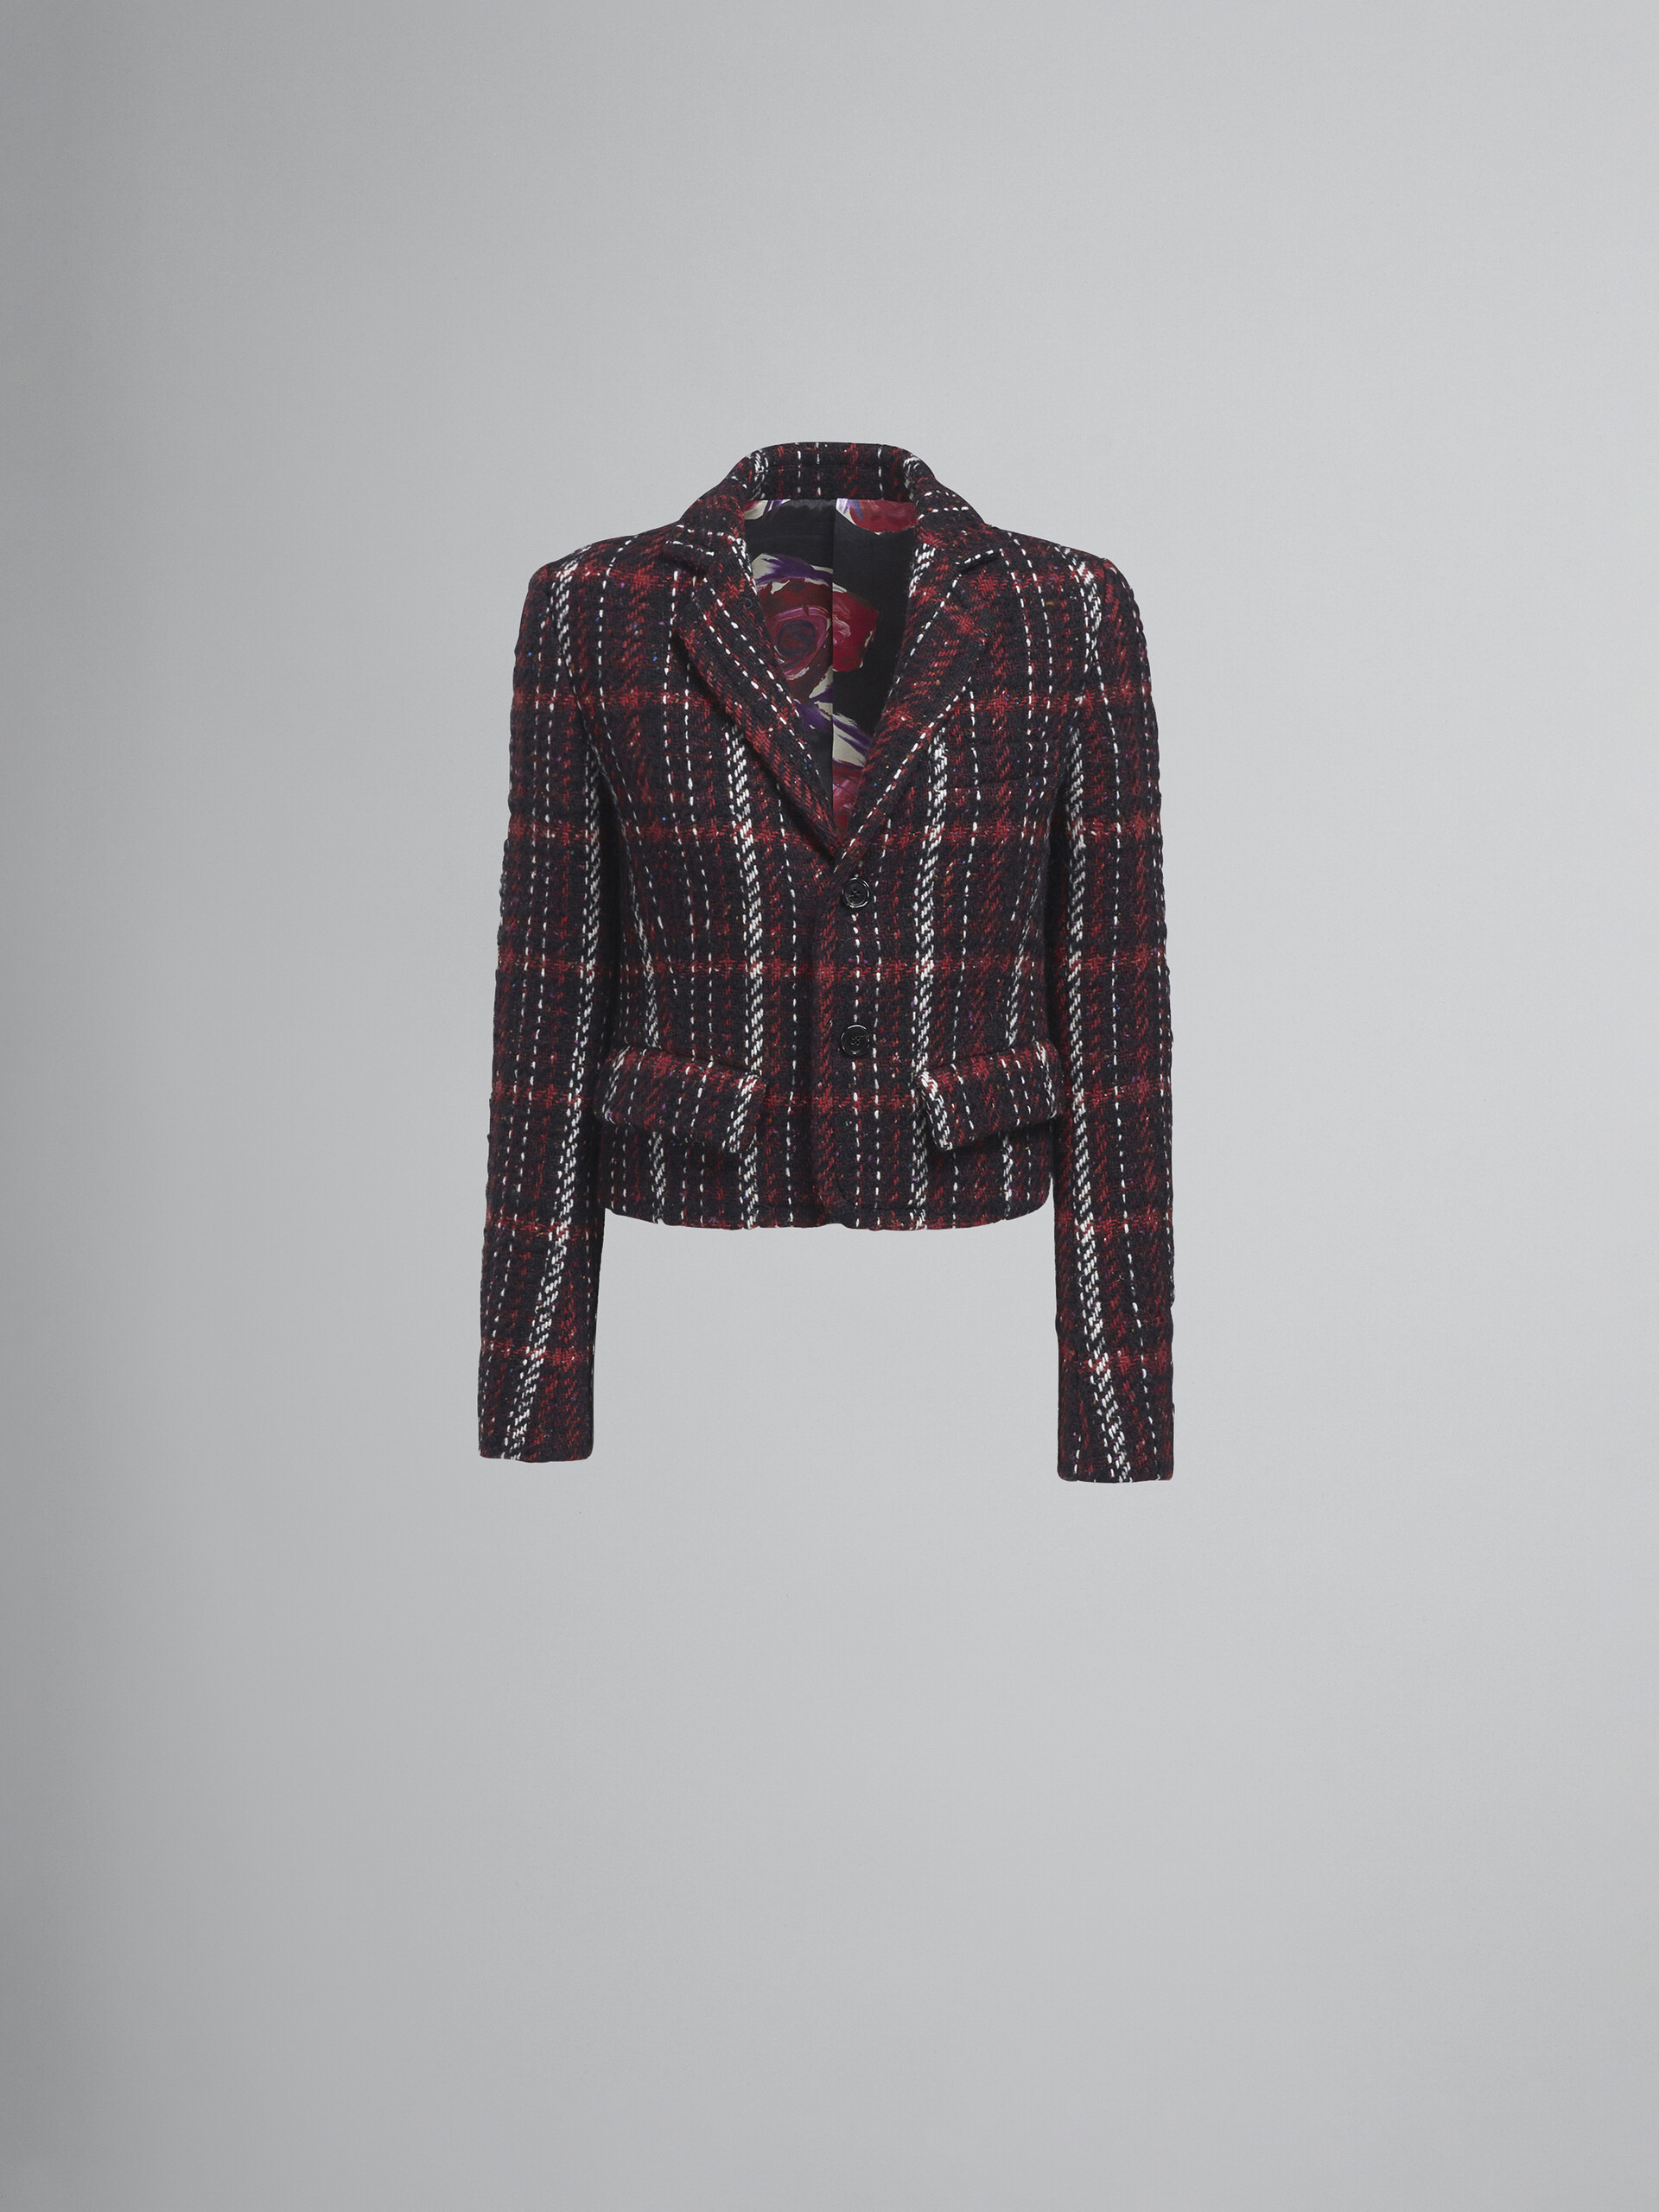 Speckled tweed baby jacket - Jackets - Image 1